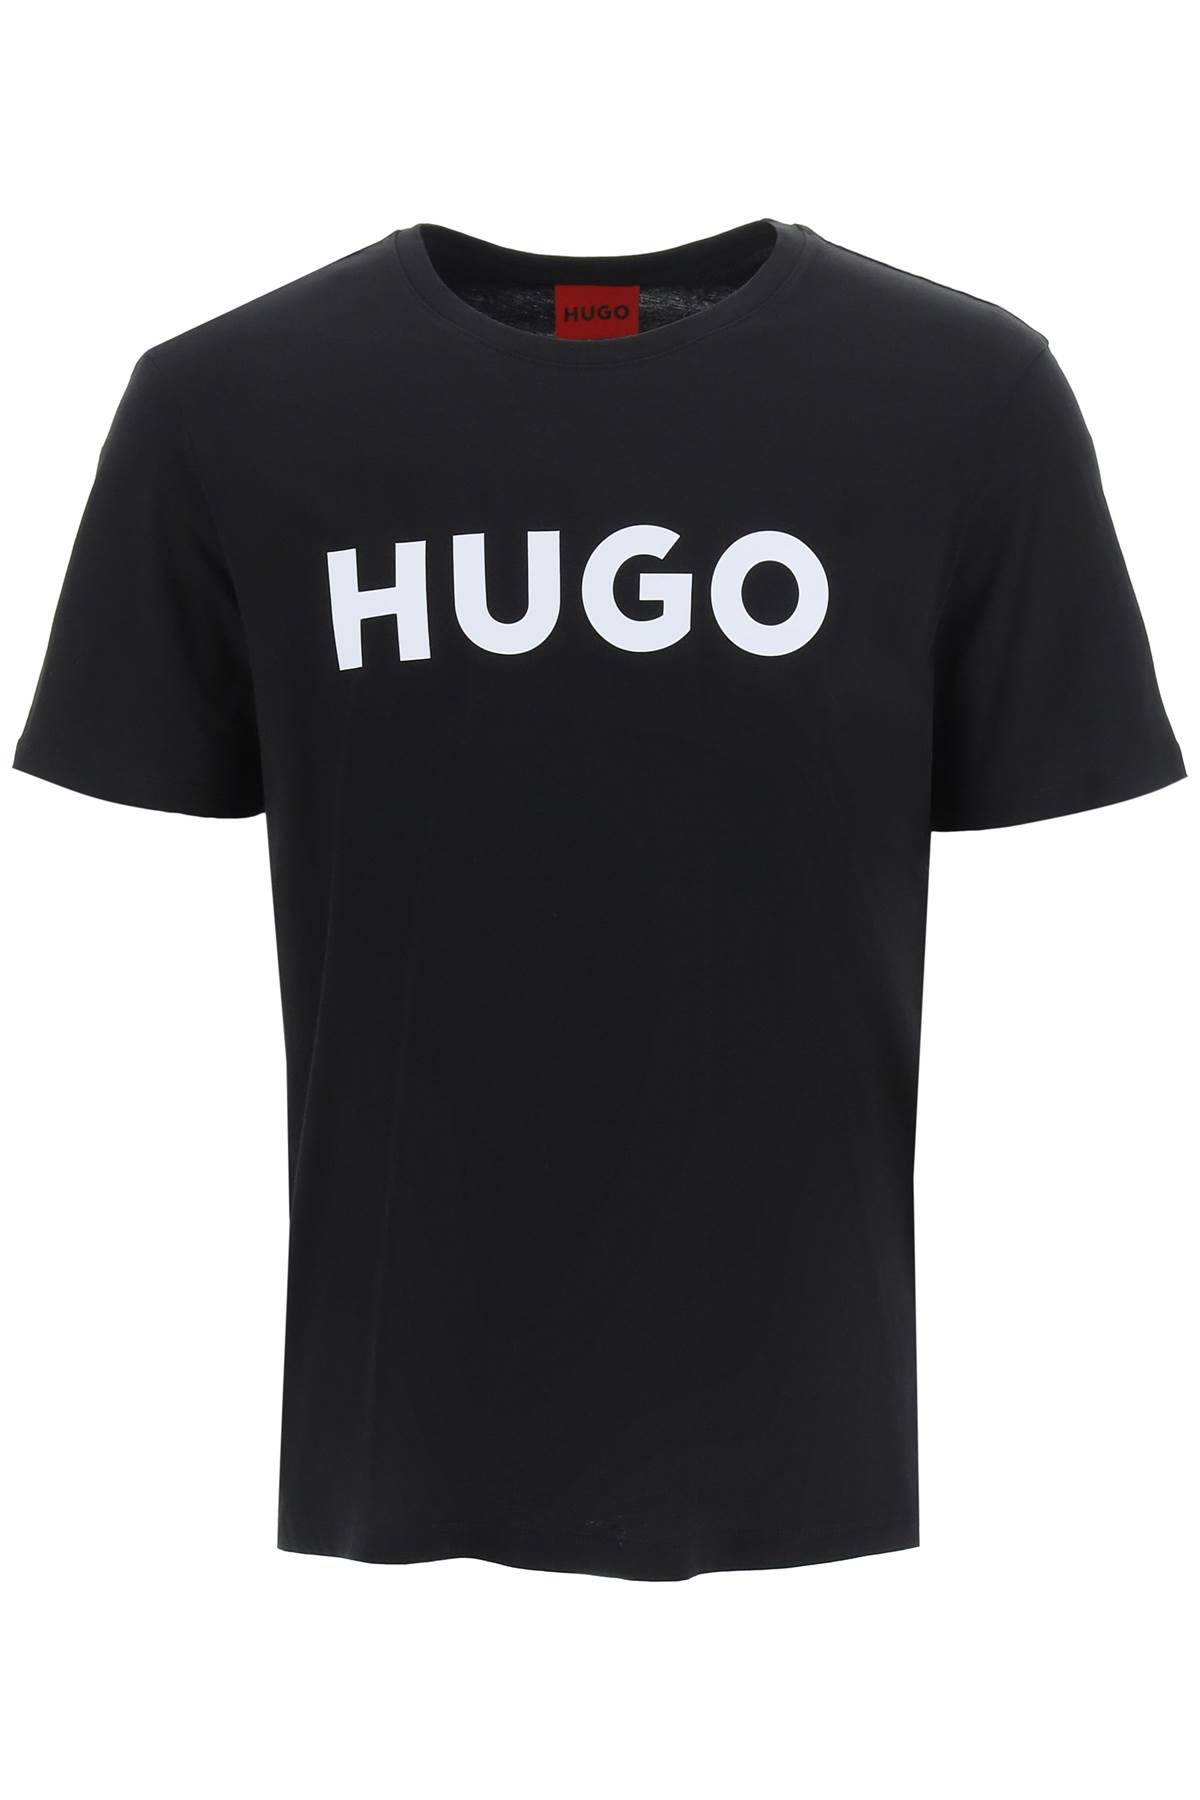 Hugo HUGO dulivio logo t-shirt